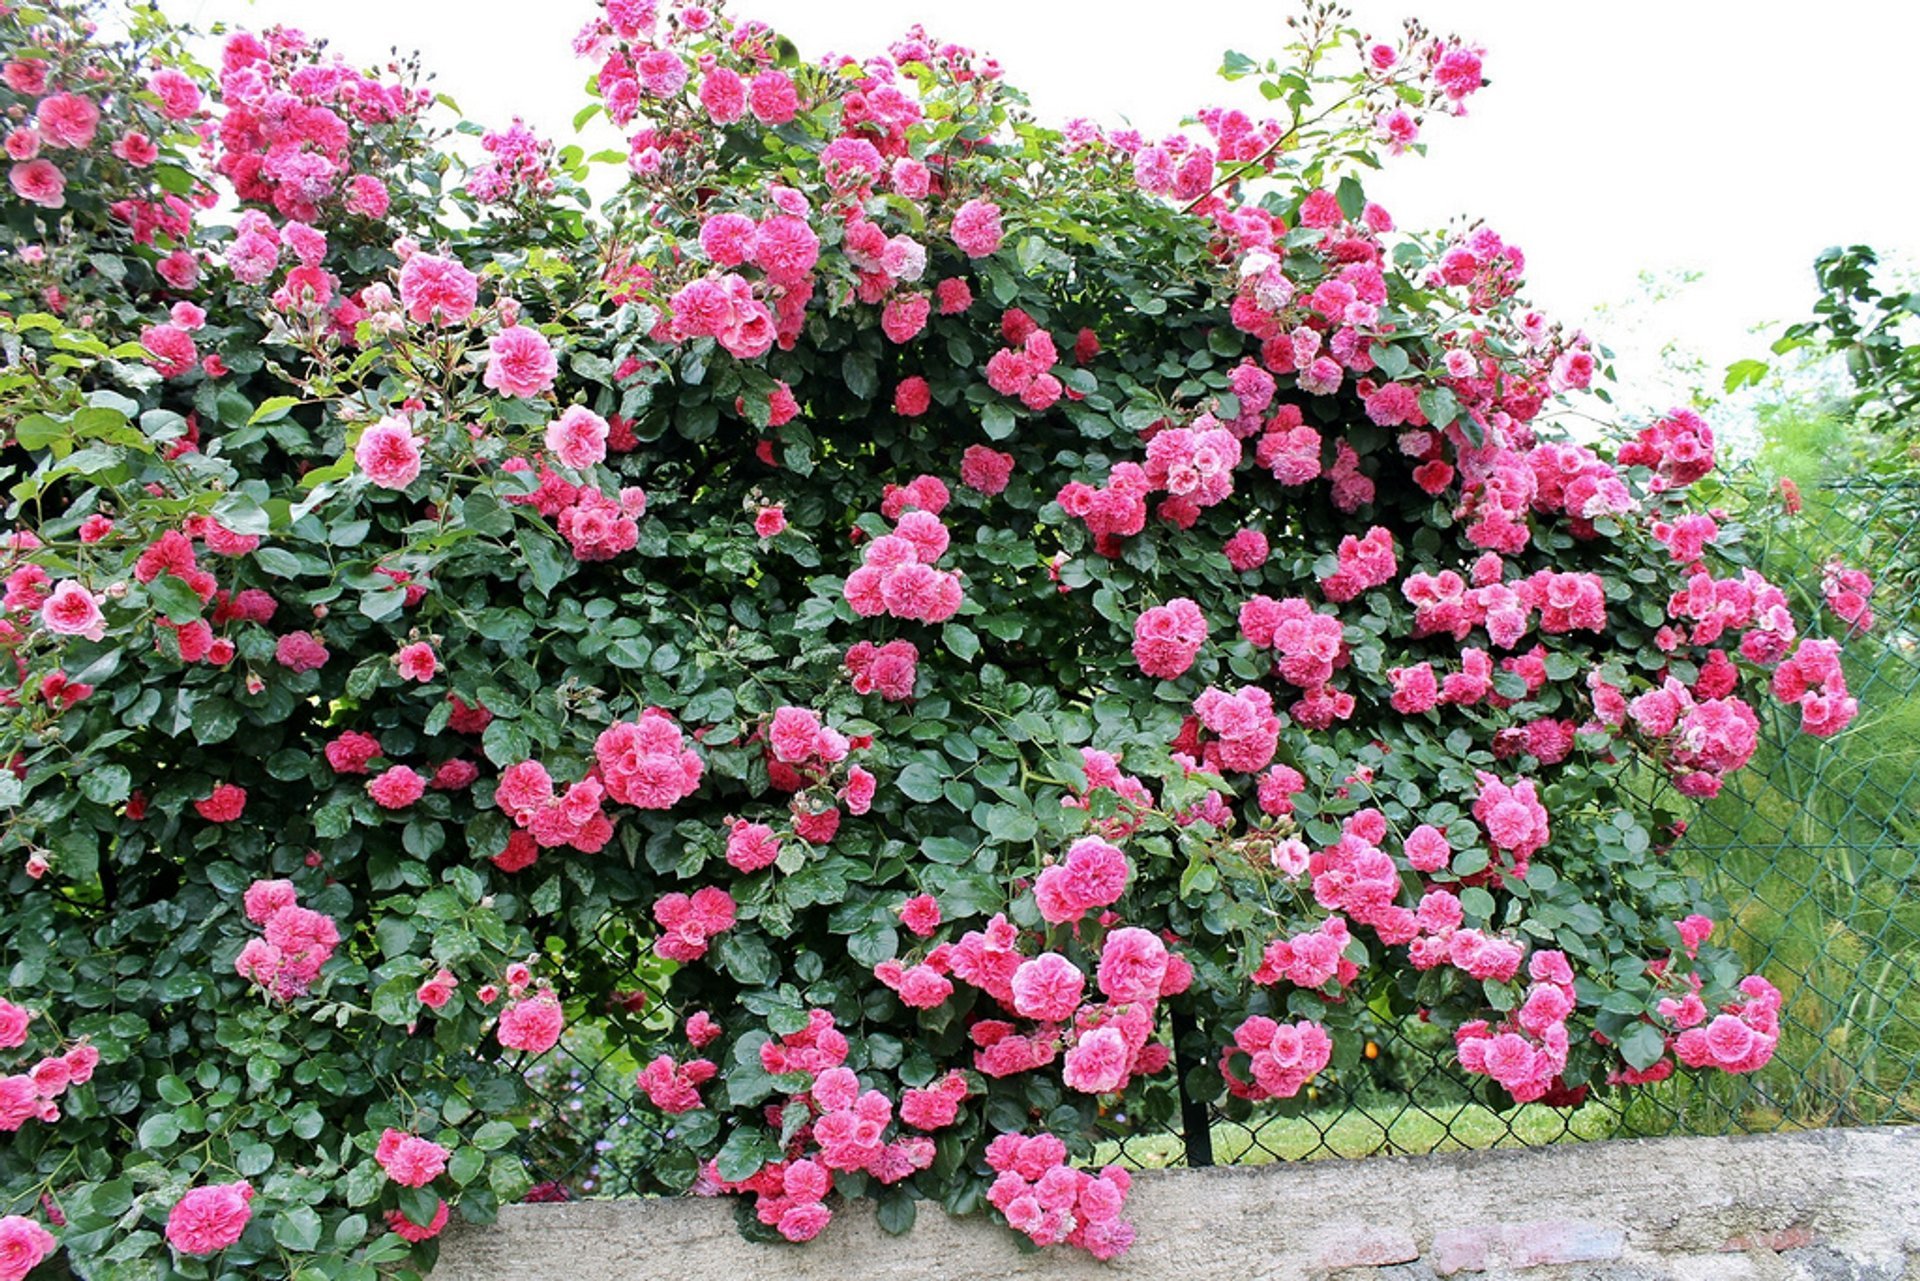 Jardins de rosas